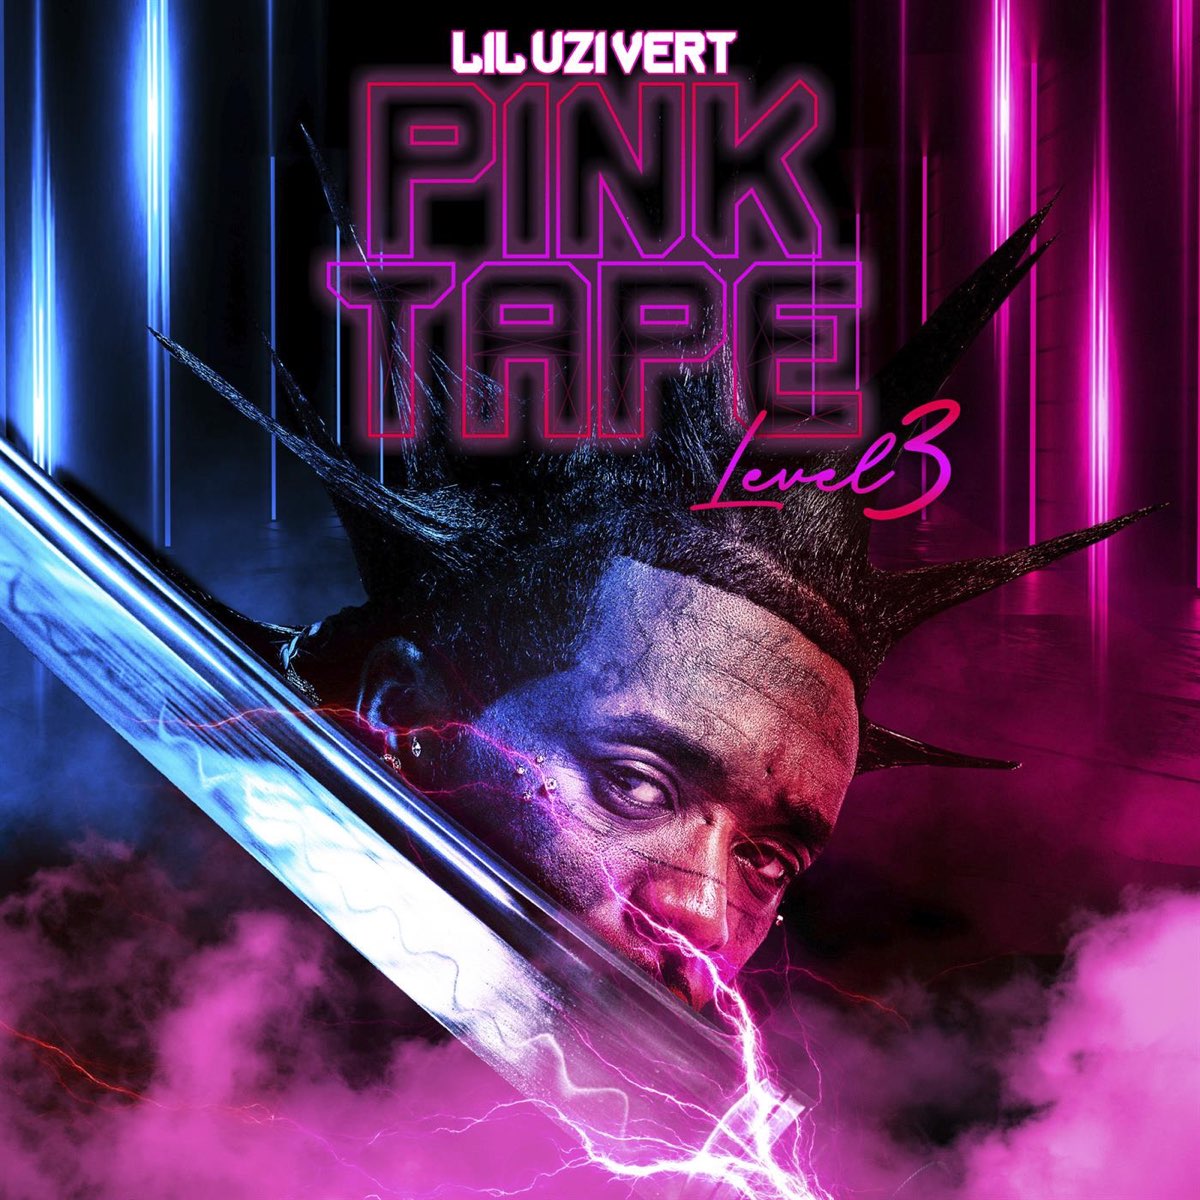 Pink Tape: Level 3 - EP - Album by Lil Uzi Vert - Apple Music